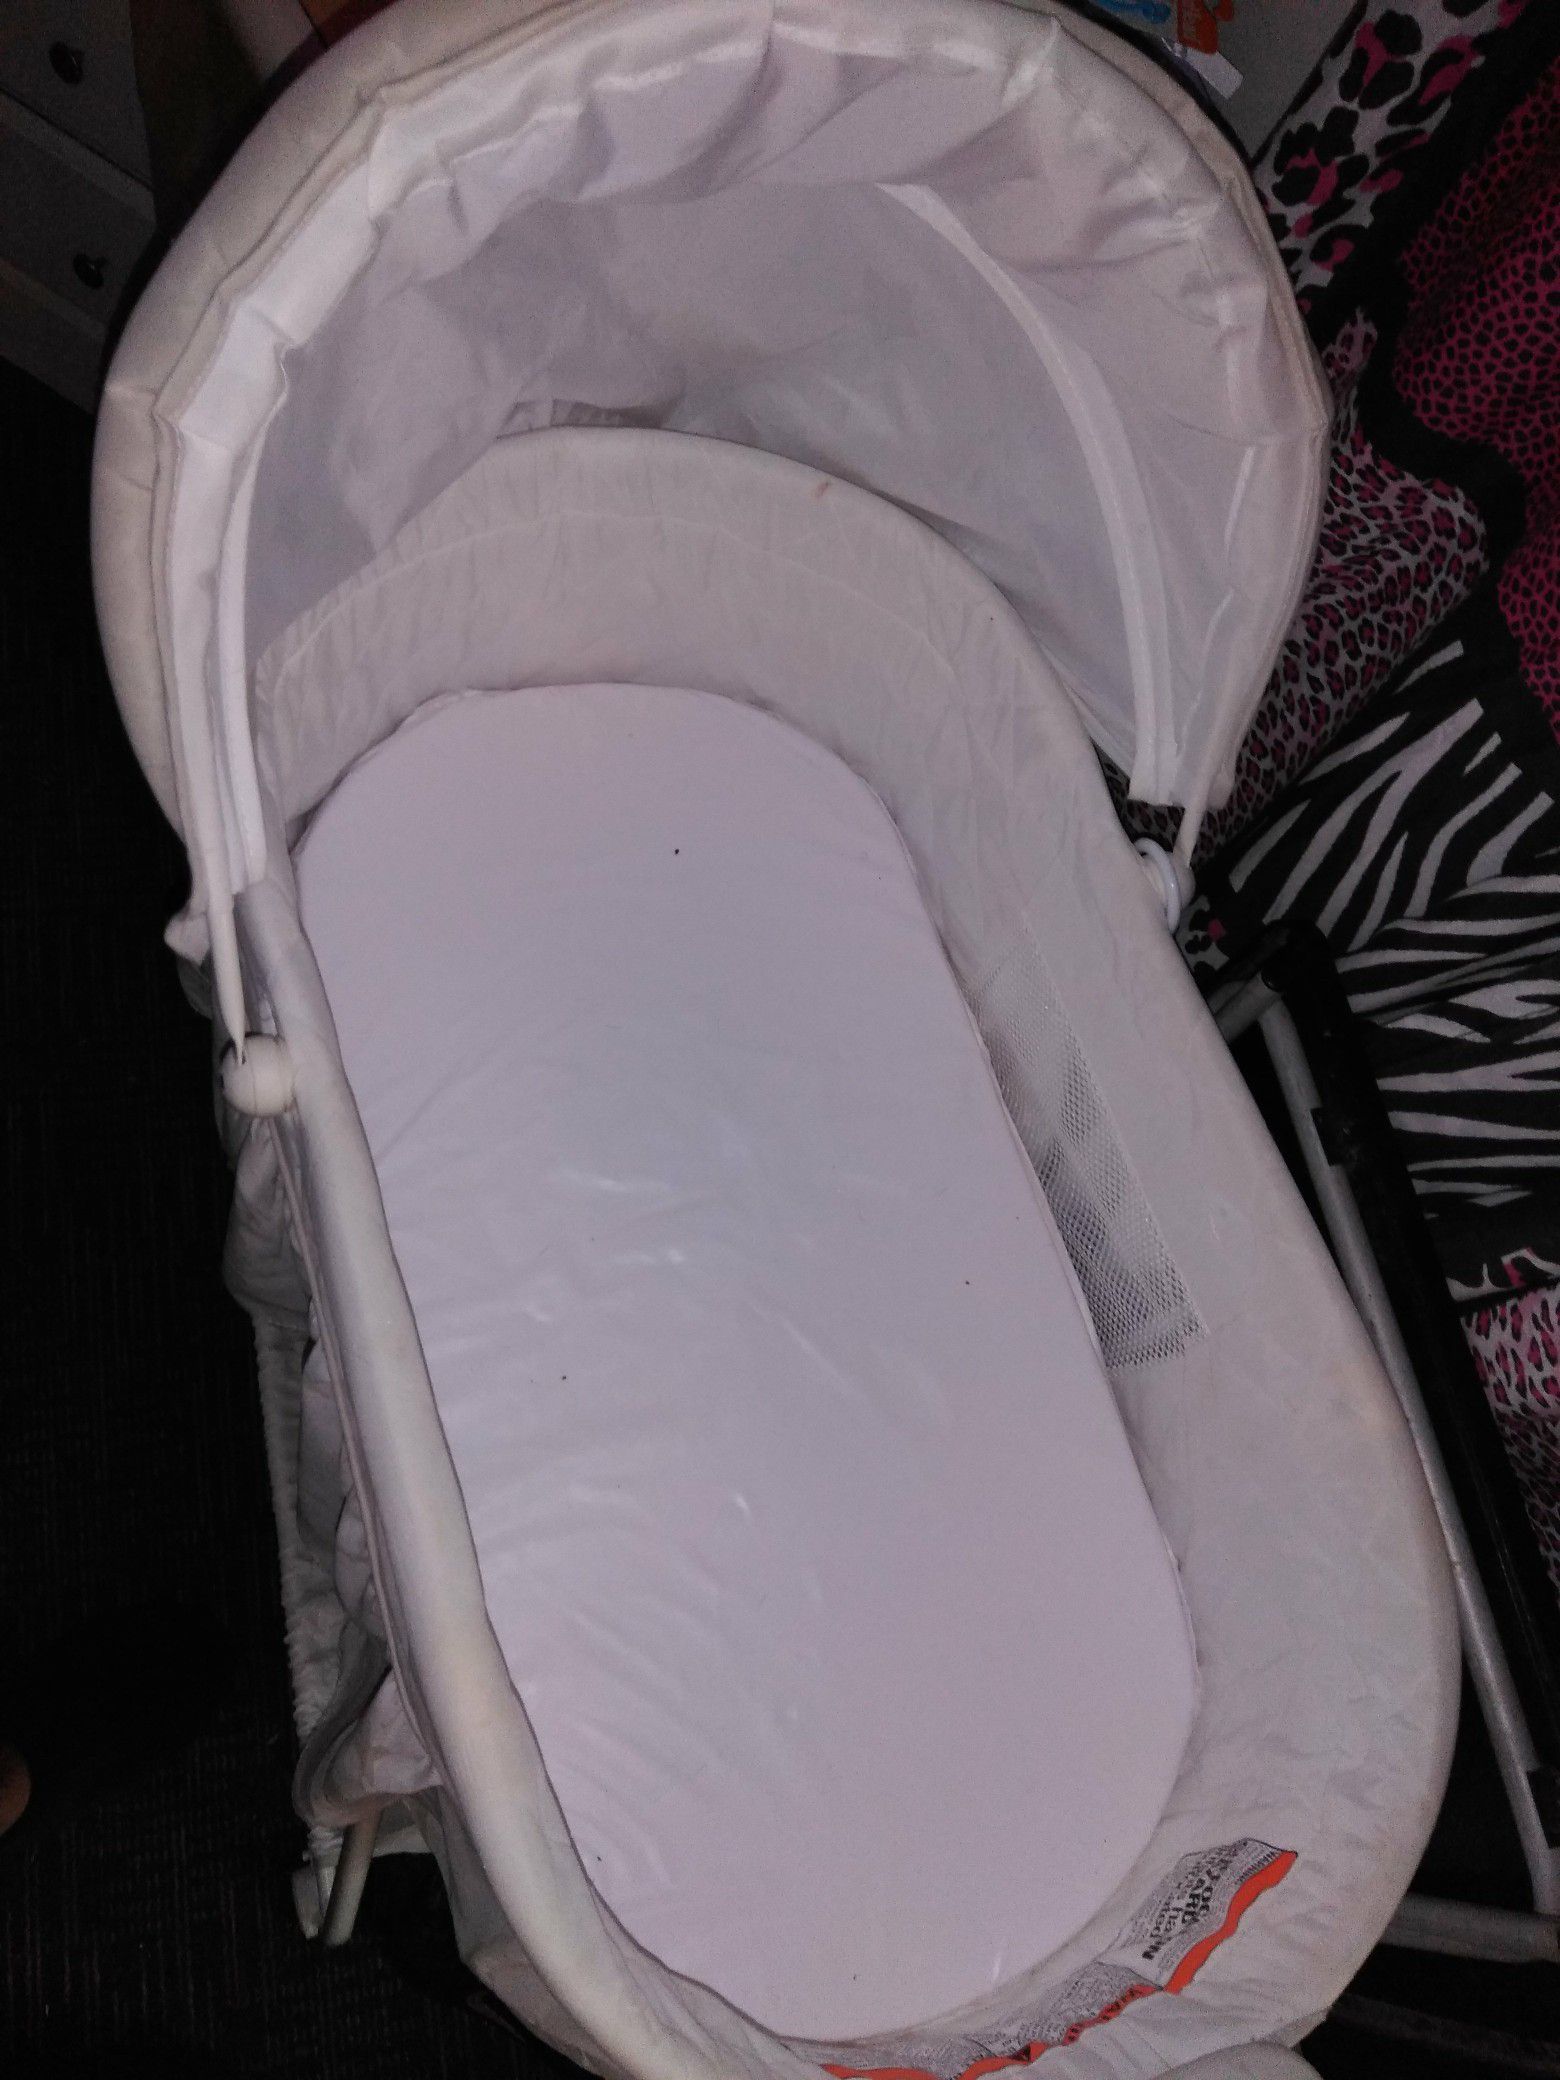 White bassinet